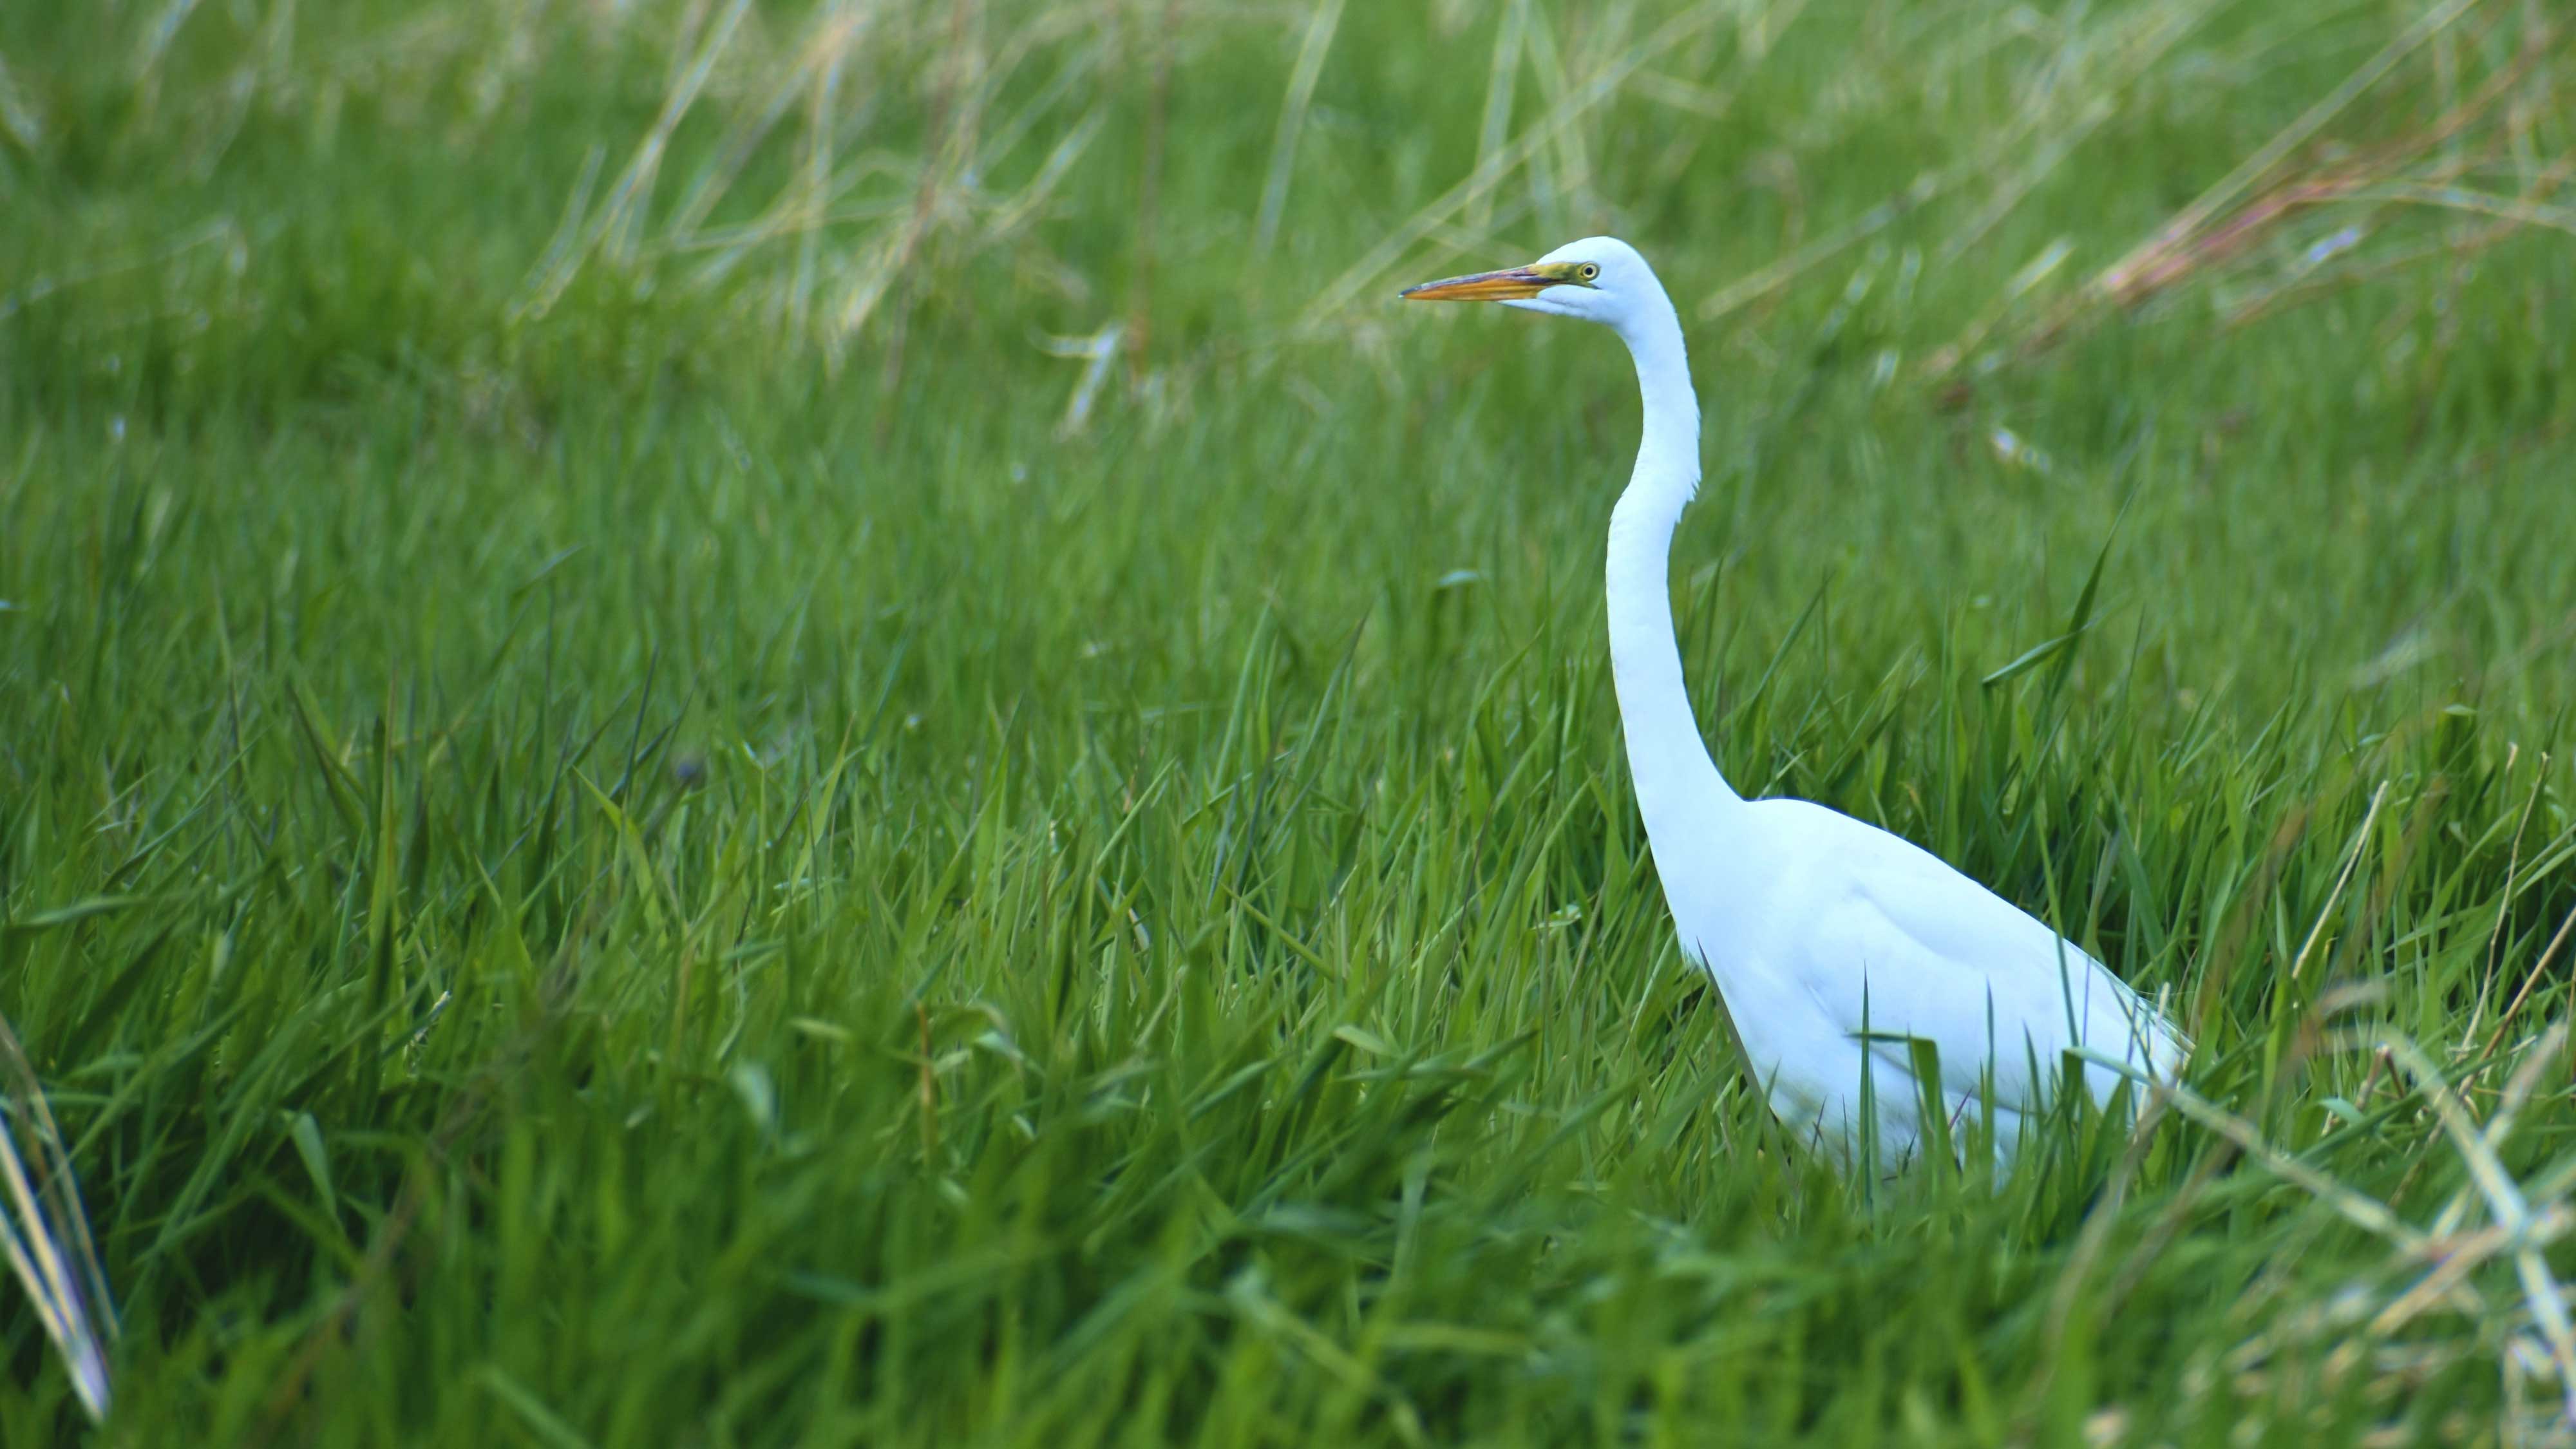 A great egret walking through a field.